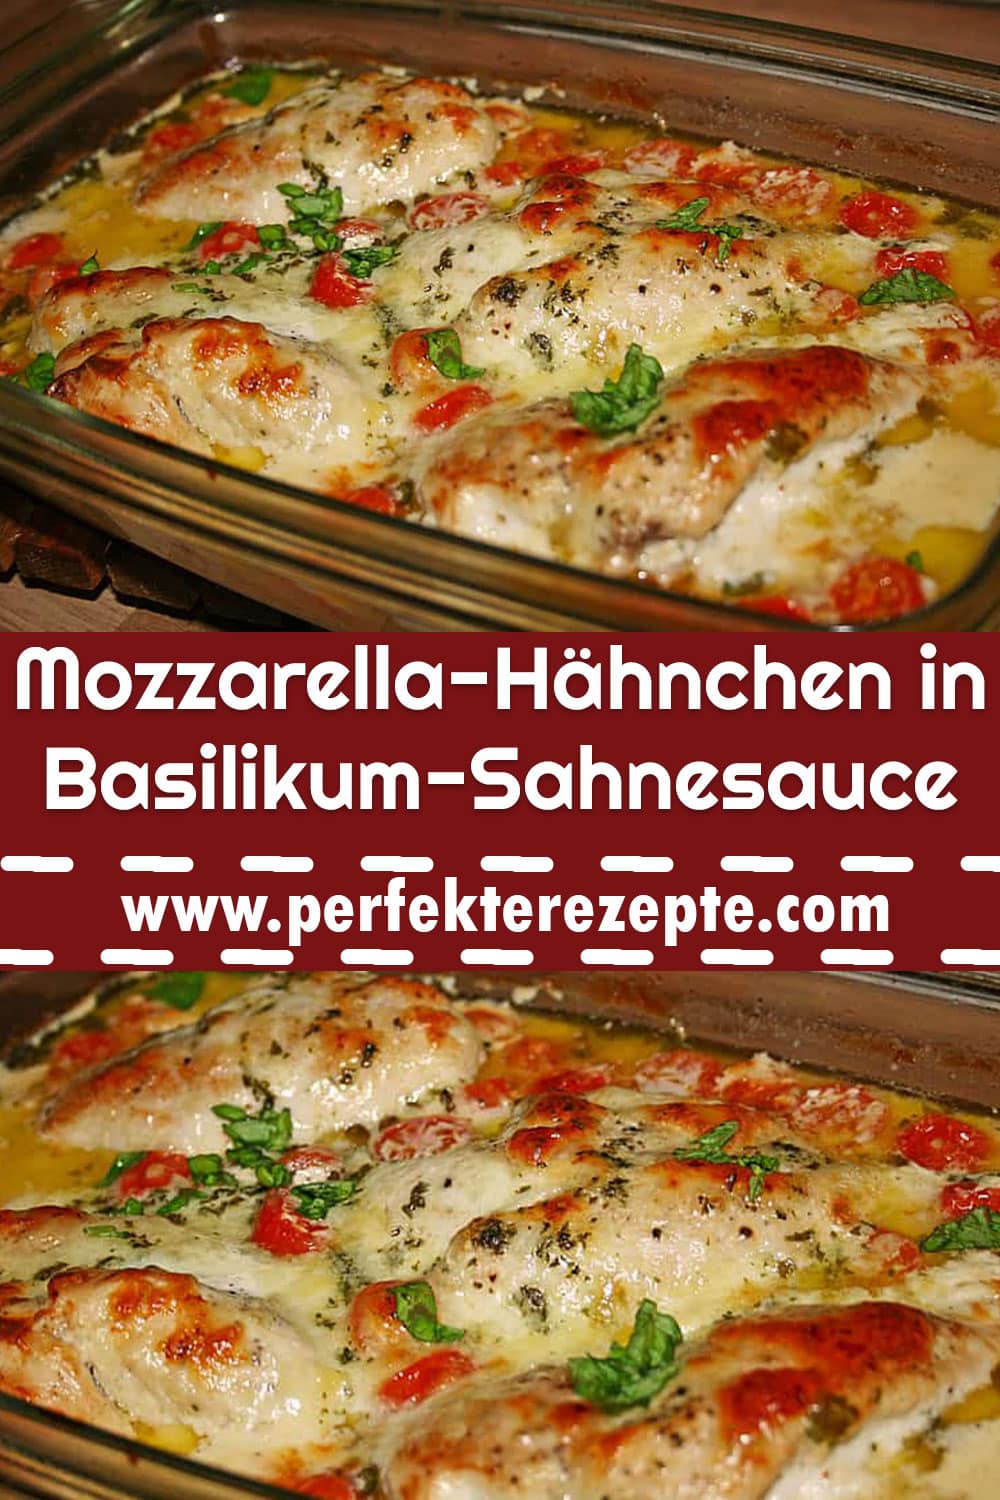 Mozzarella-Hähnchen in Basilikum-Sahnesauce Rezept